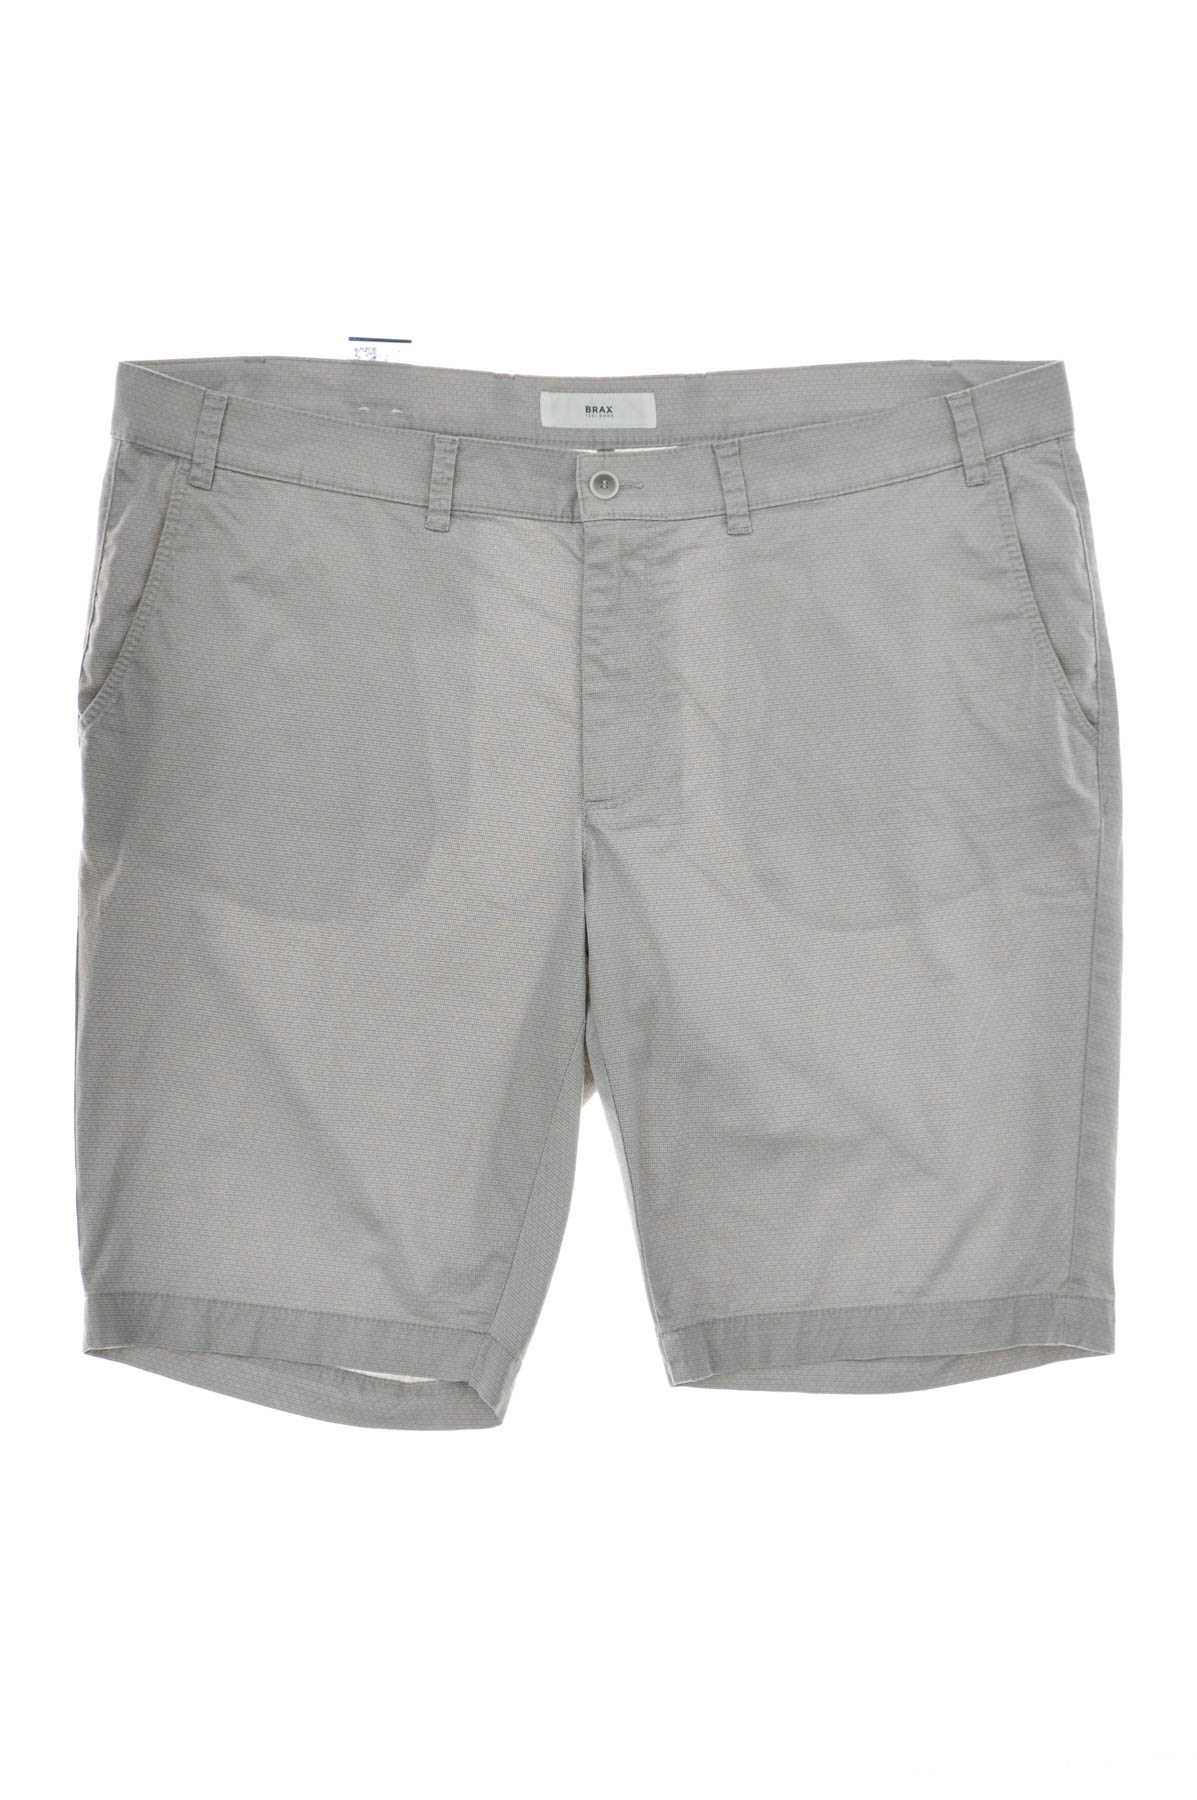 Men's shorts - BRAX - 0